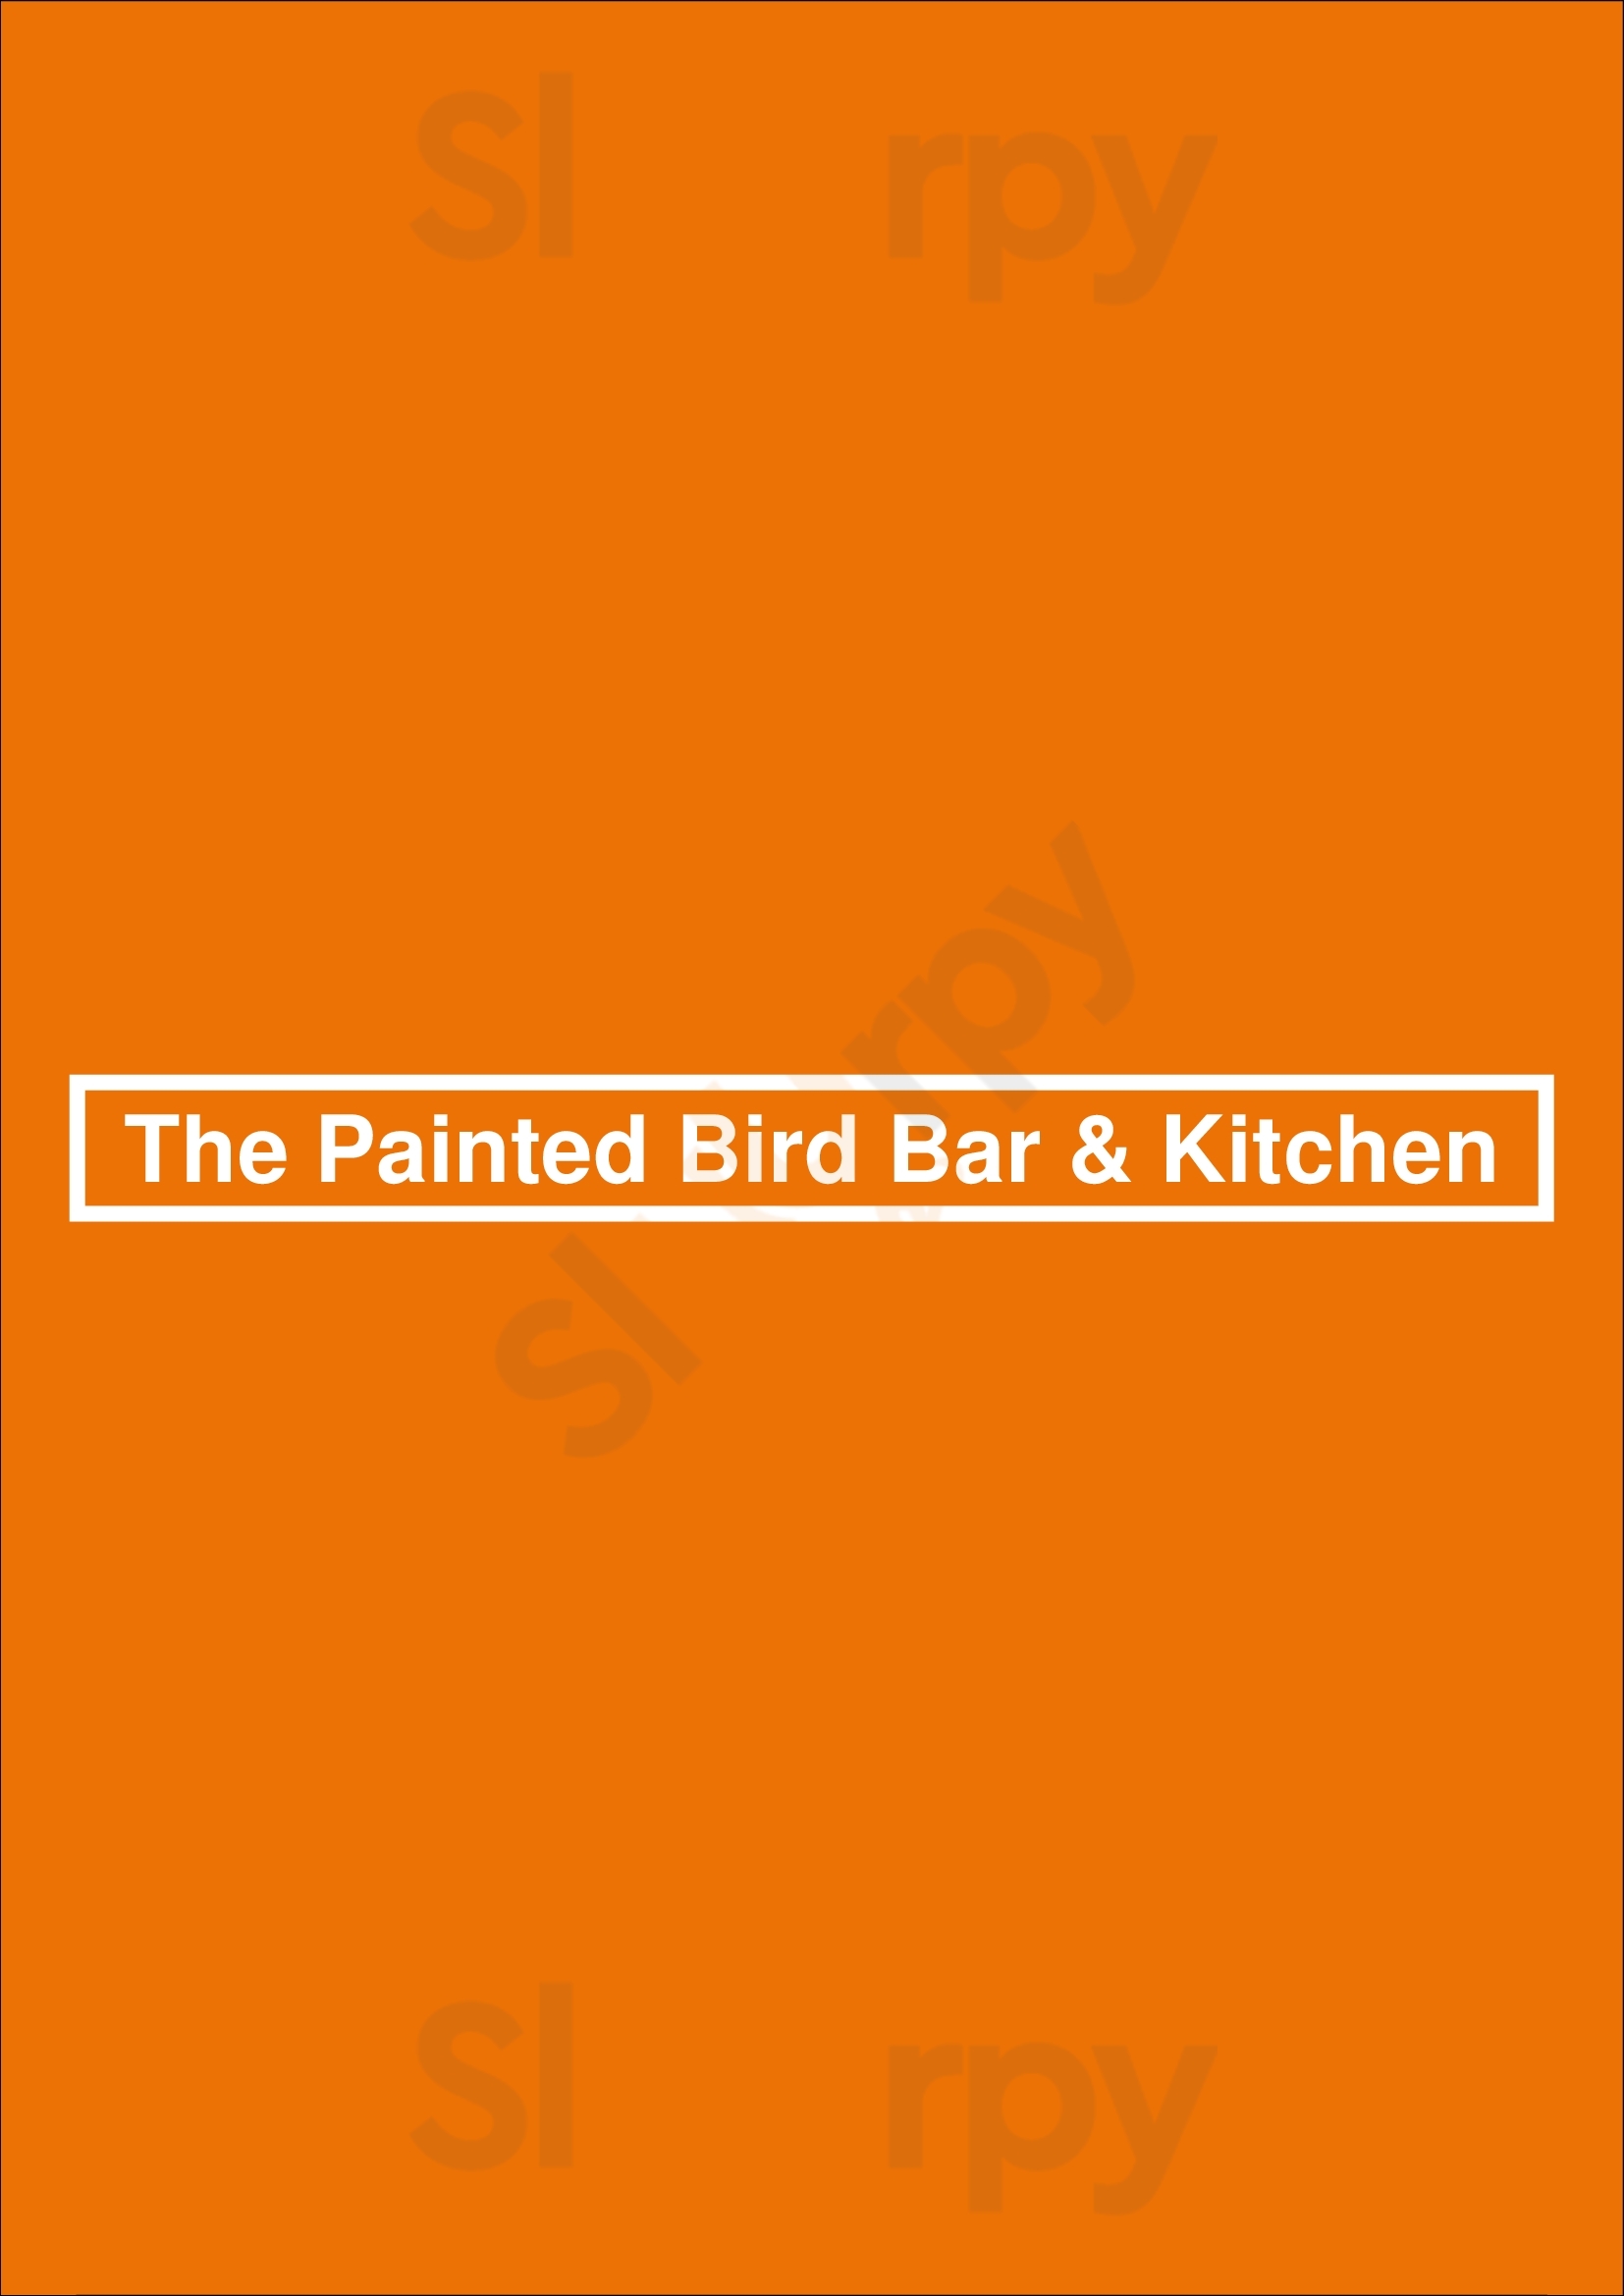 The Painted Bird Bar & Kitchen Perth Menu - 1